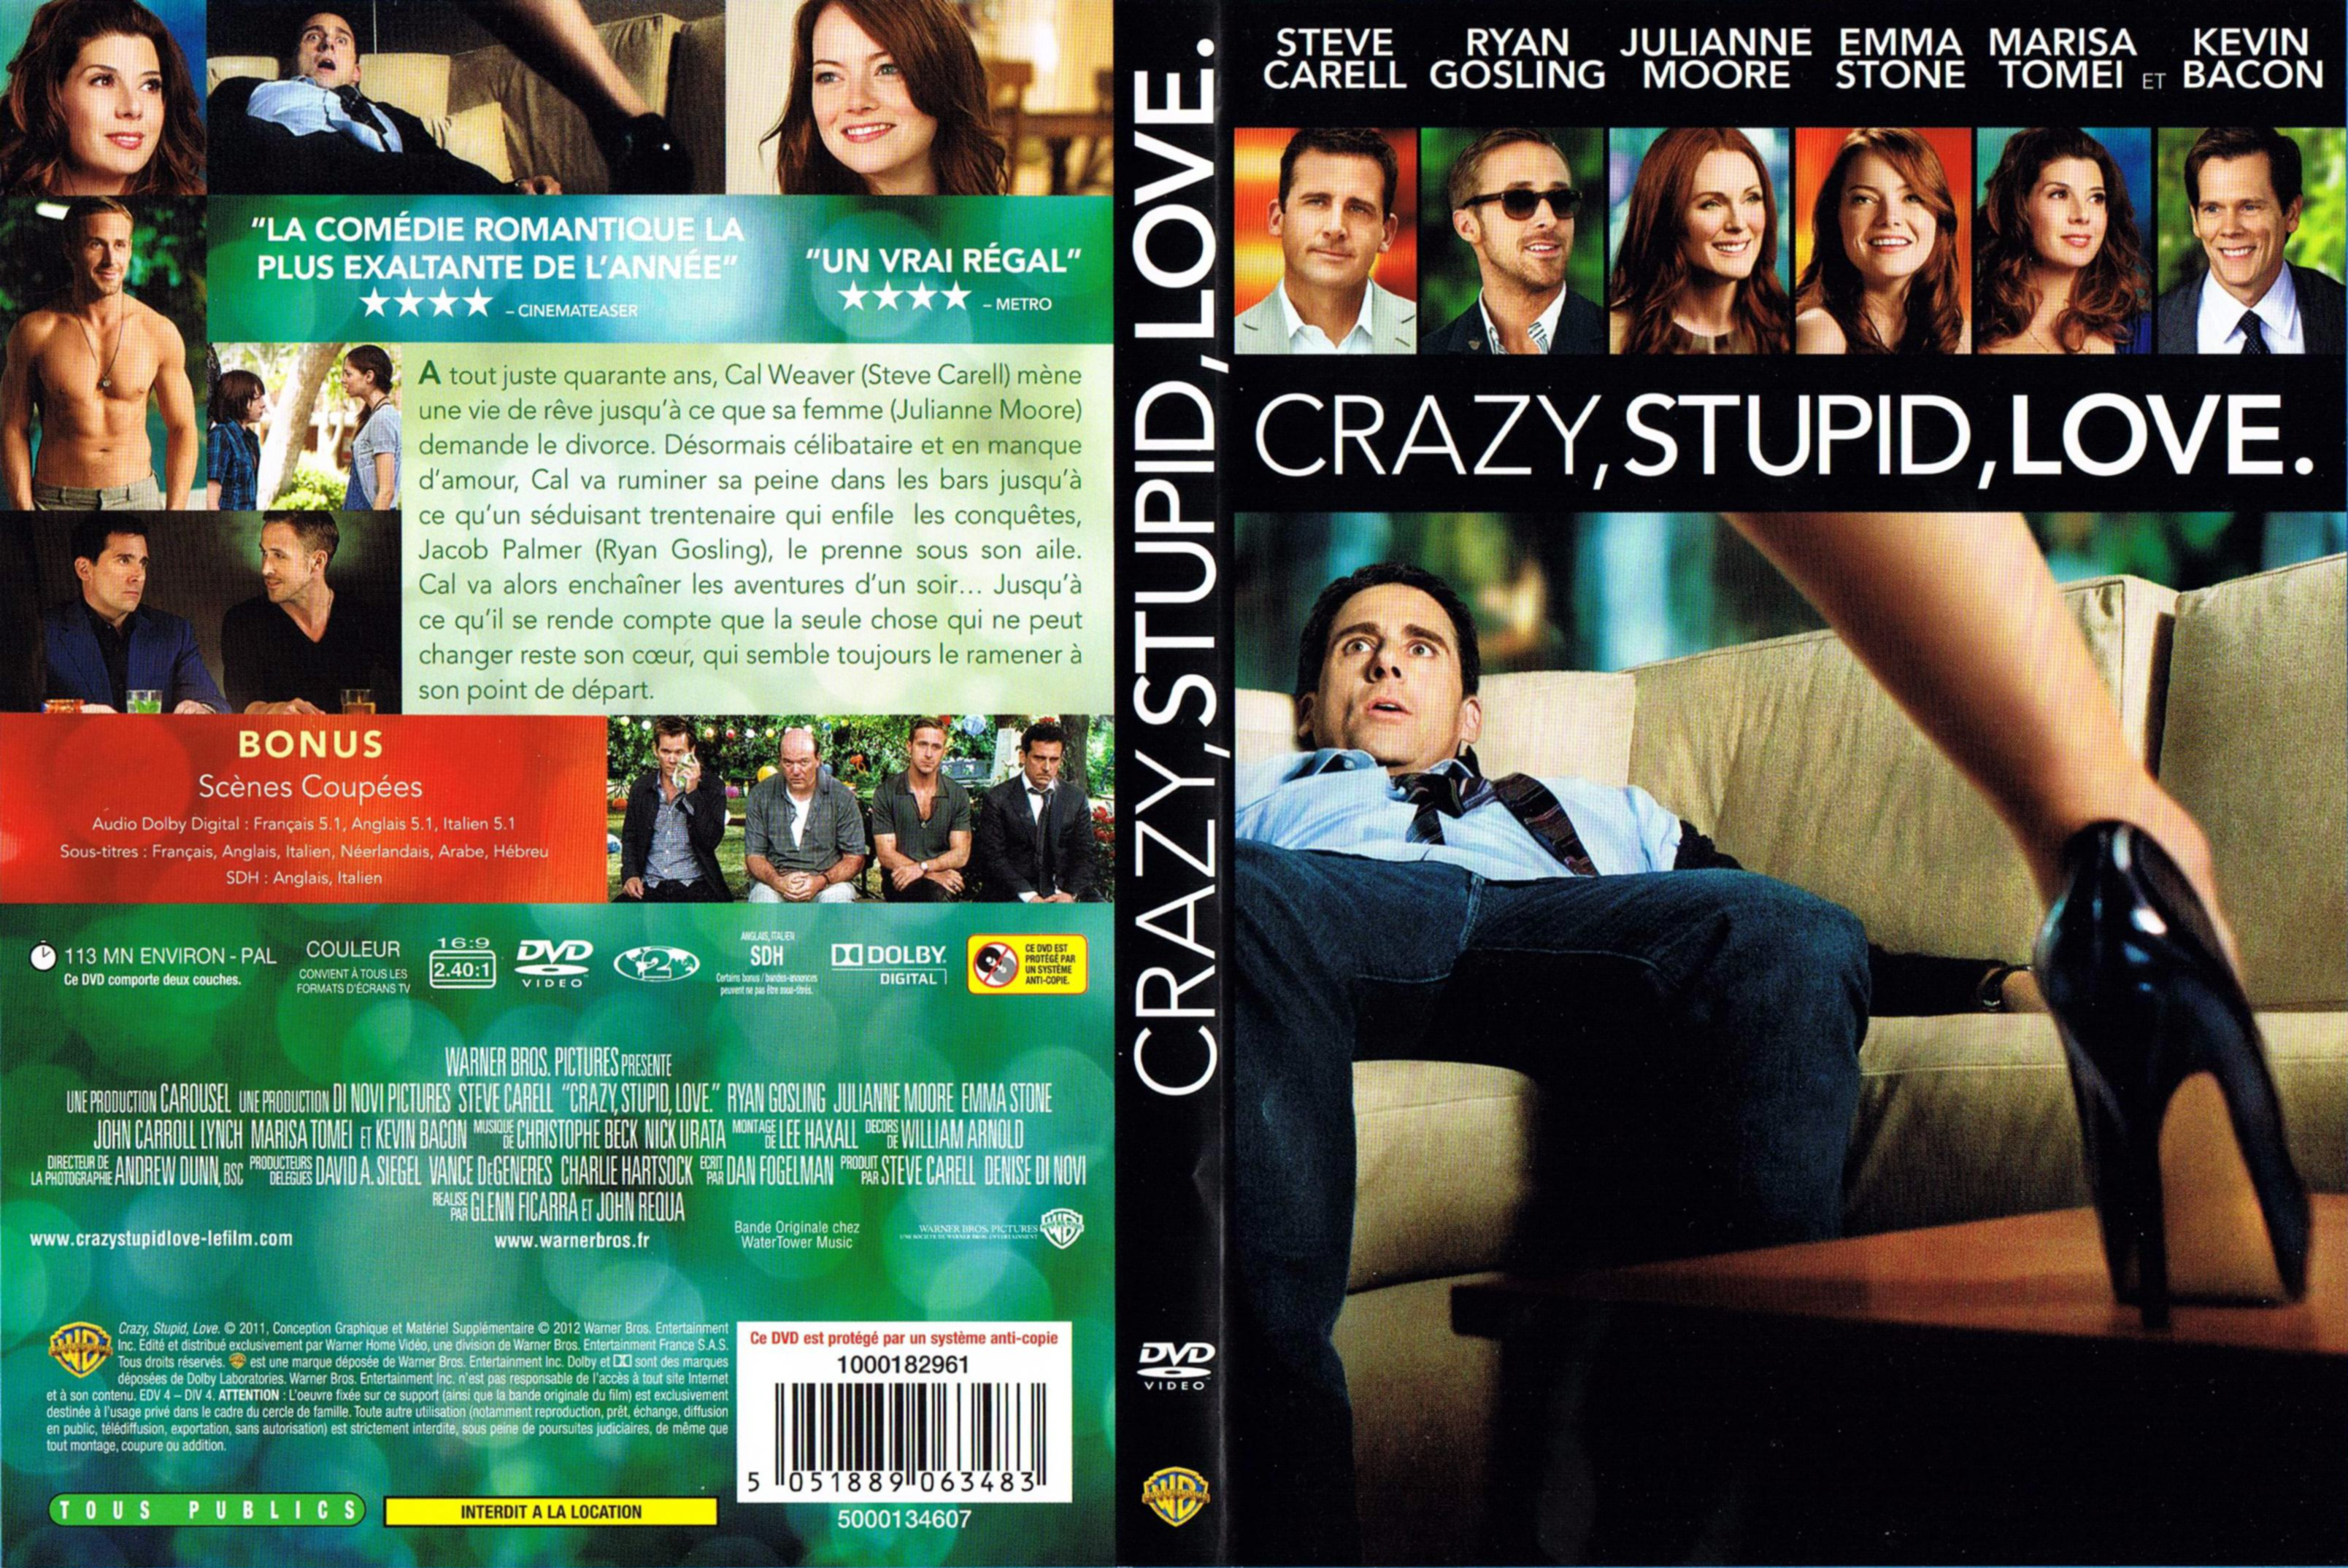 Jaquette DVD Crazy, Stupid, Love